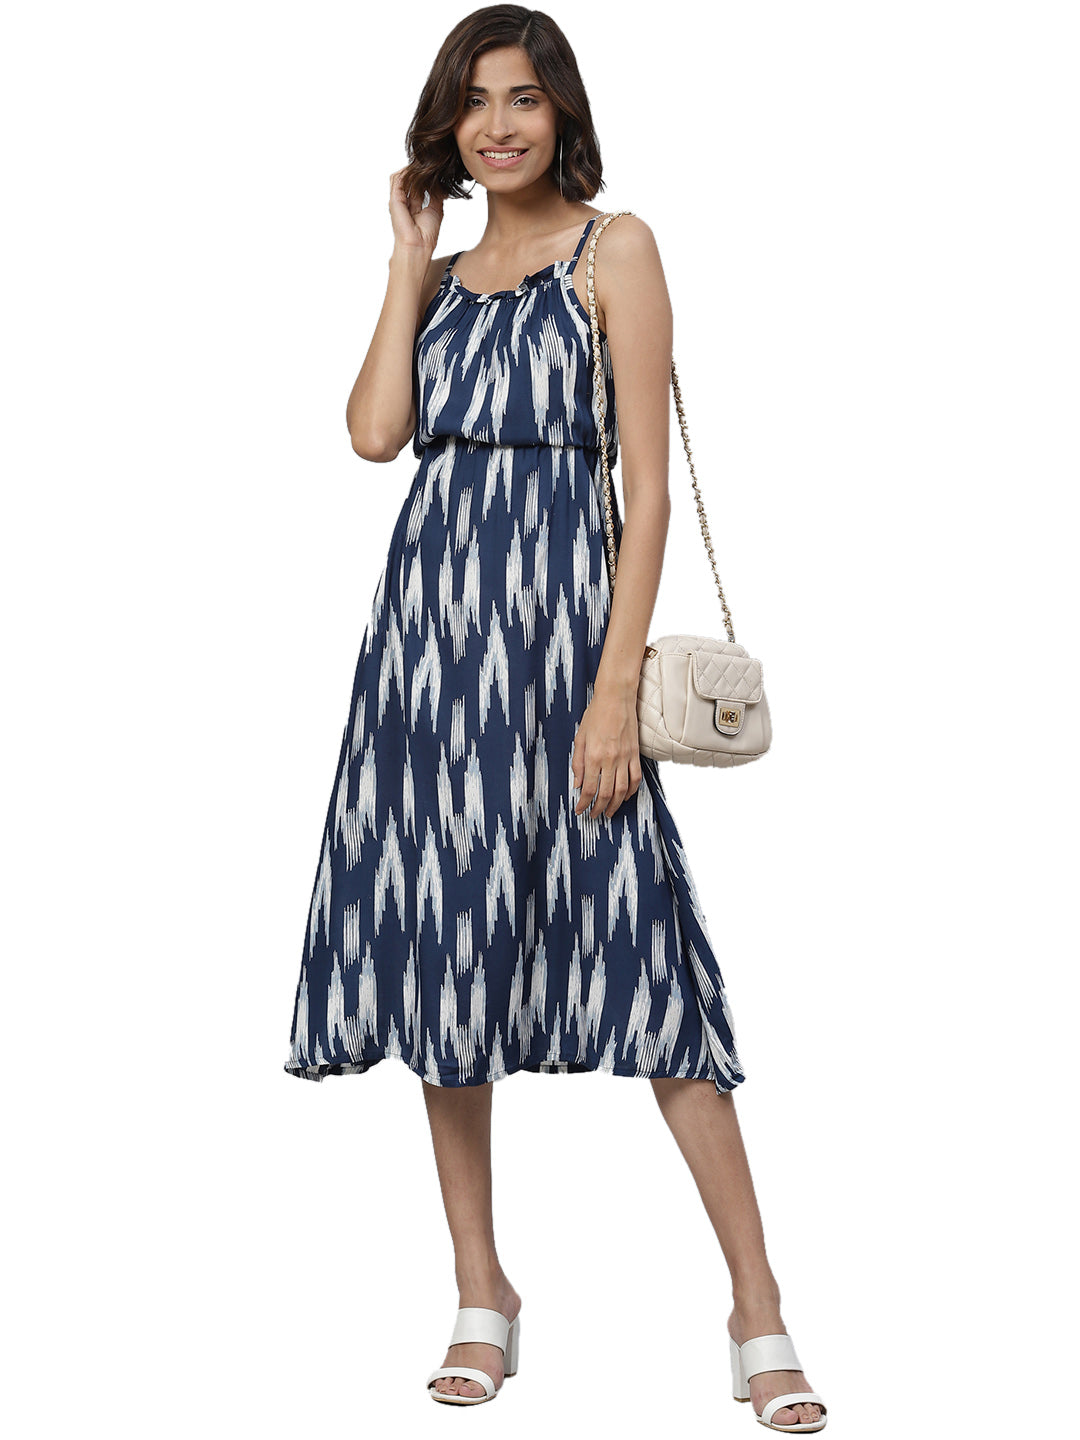 Hand Blockprint INDIGO Cotton MAXI Tier Dress With Adjustable Strapssummer  Sleeveless Beach Dress Jaipuri Print Dress Made in India 